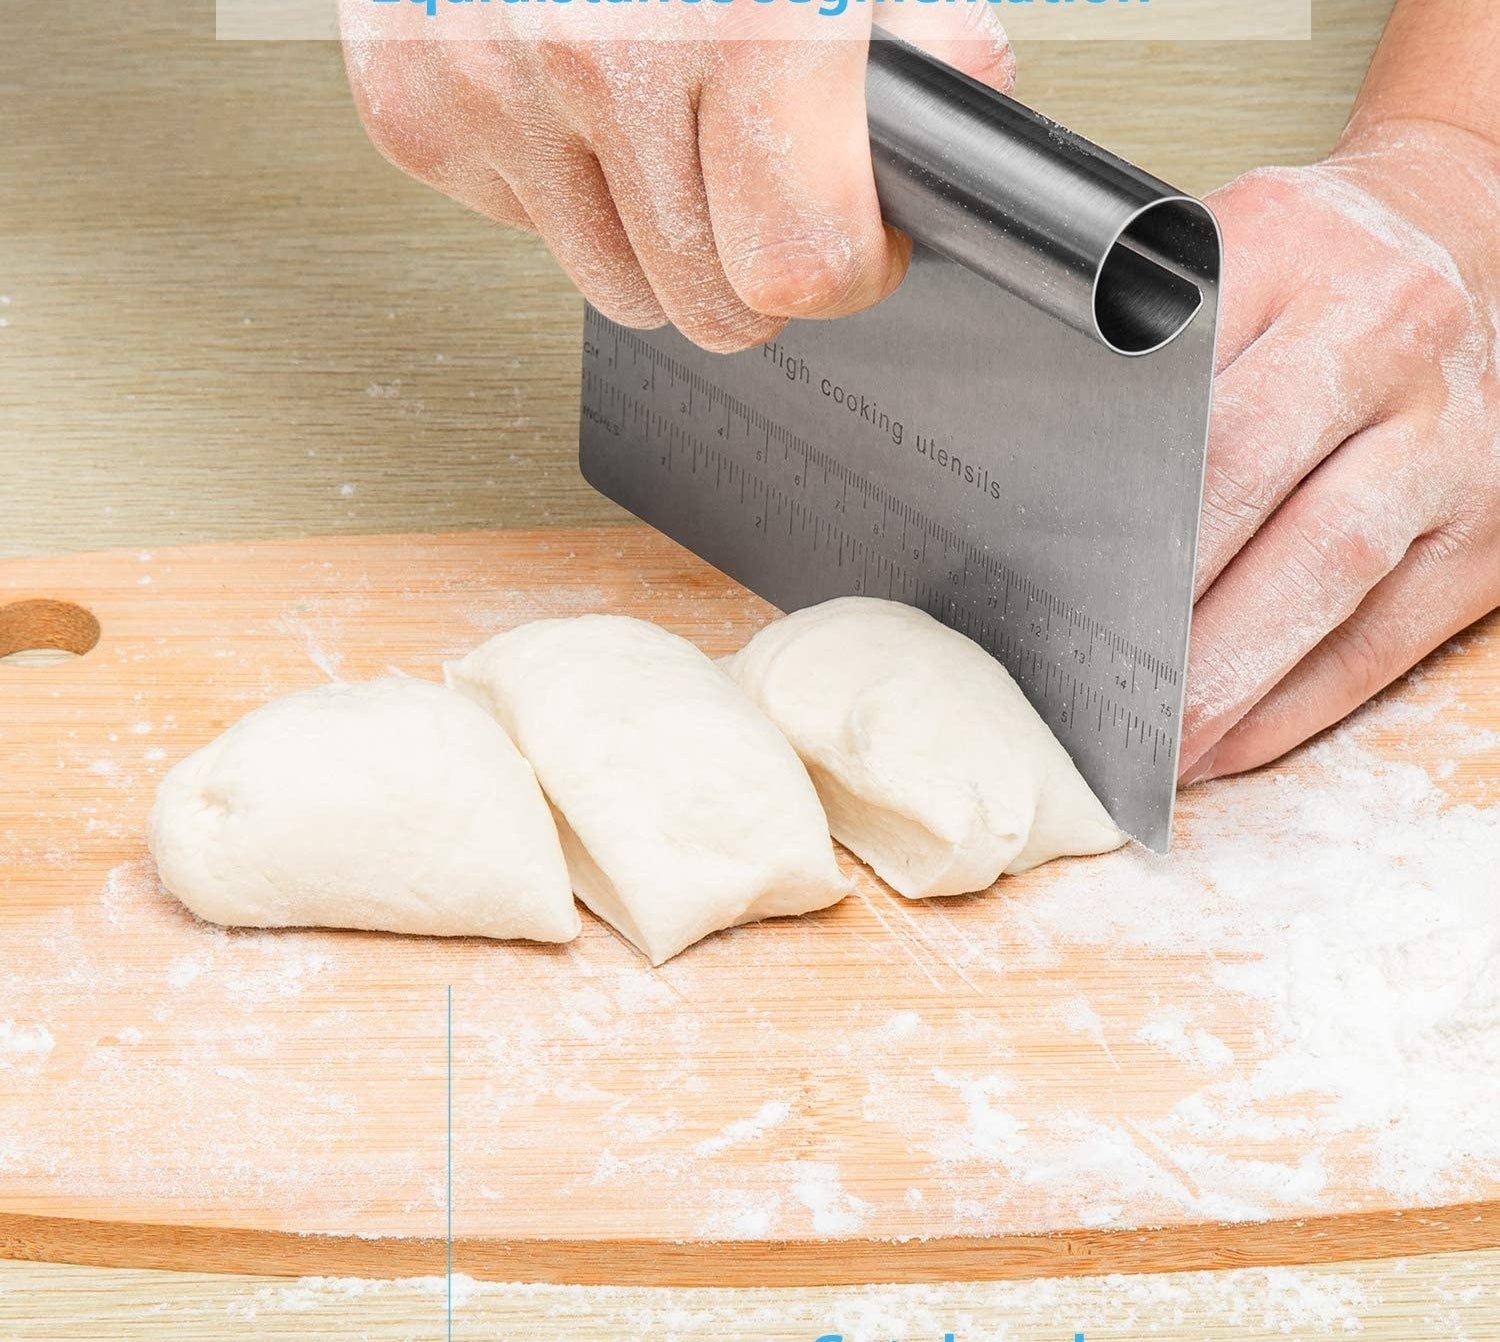 A person using the edge of the scraper to cut dough